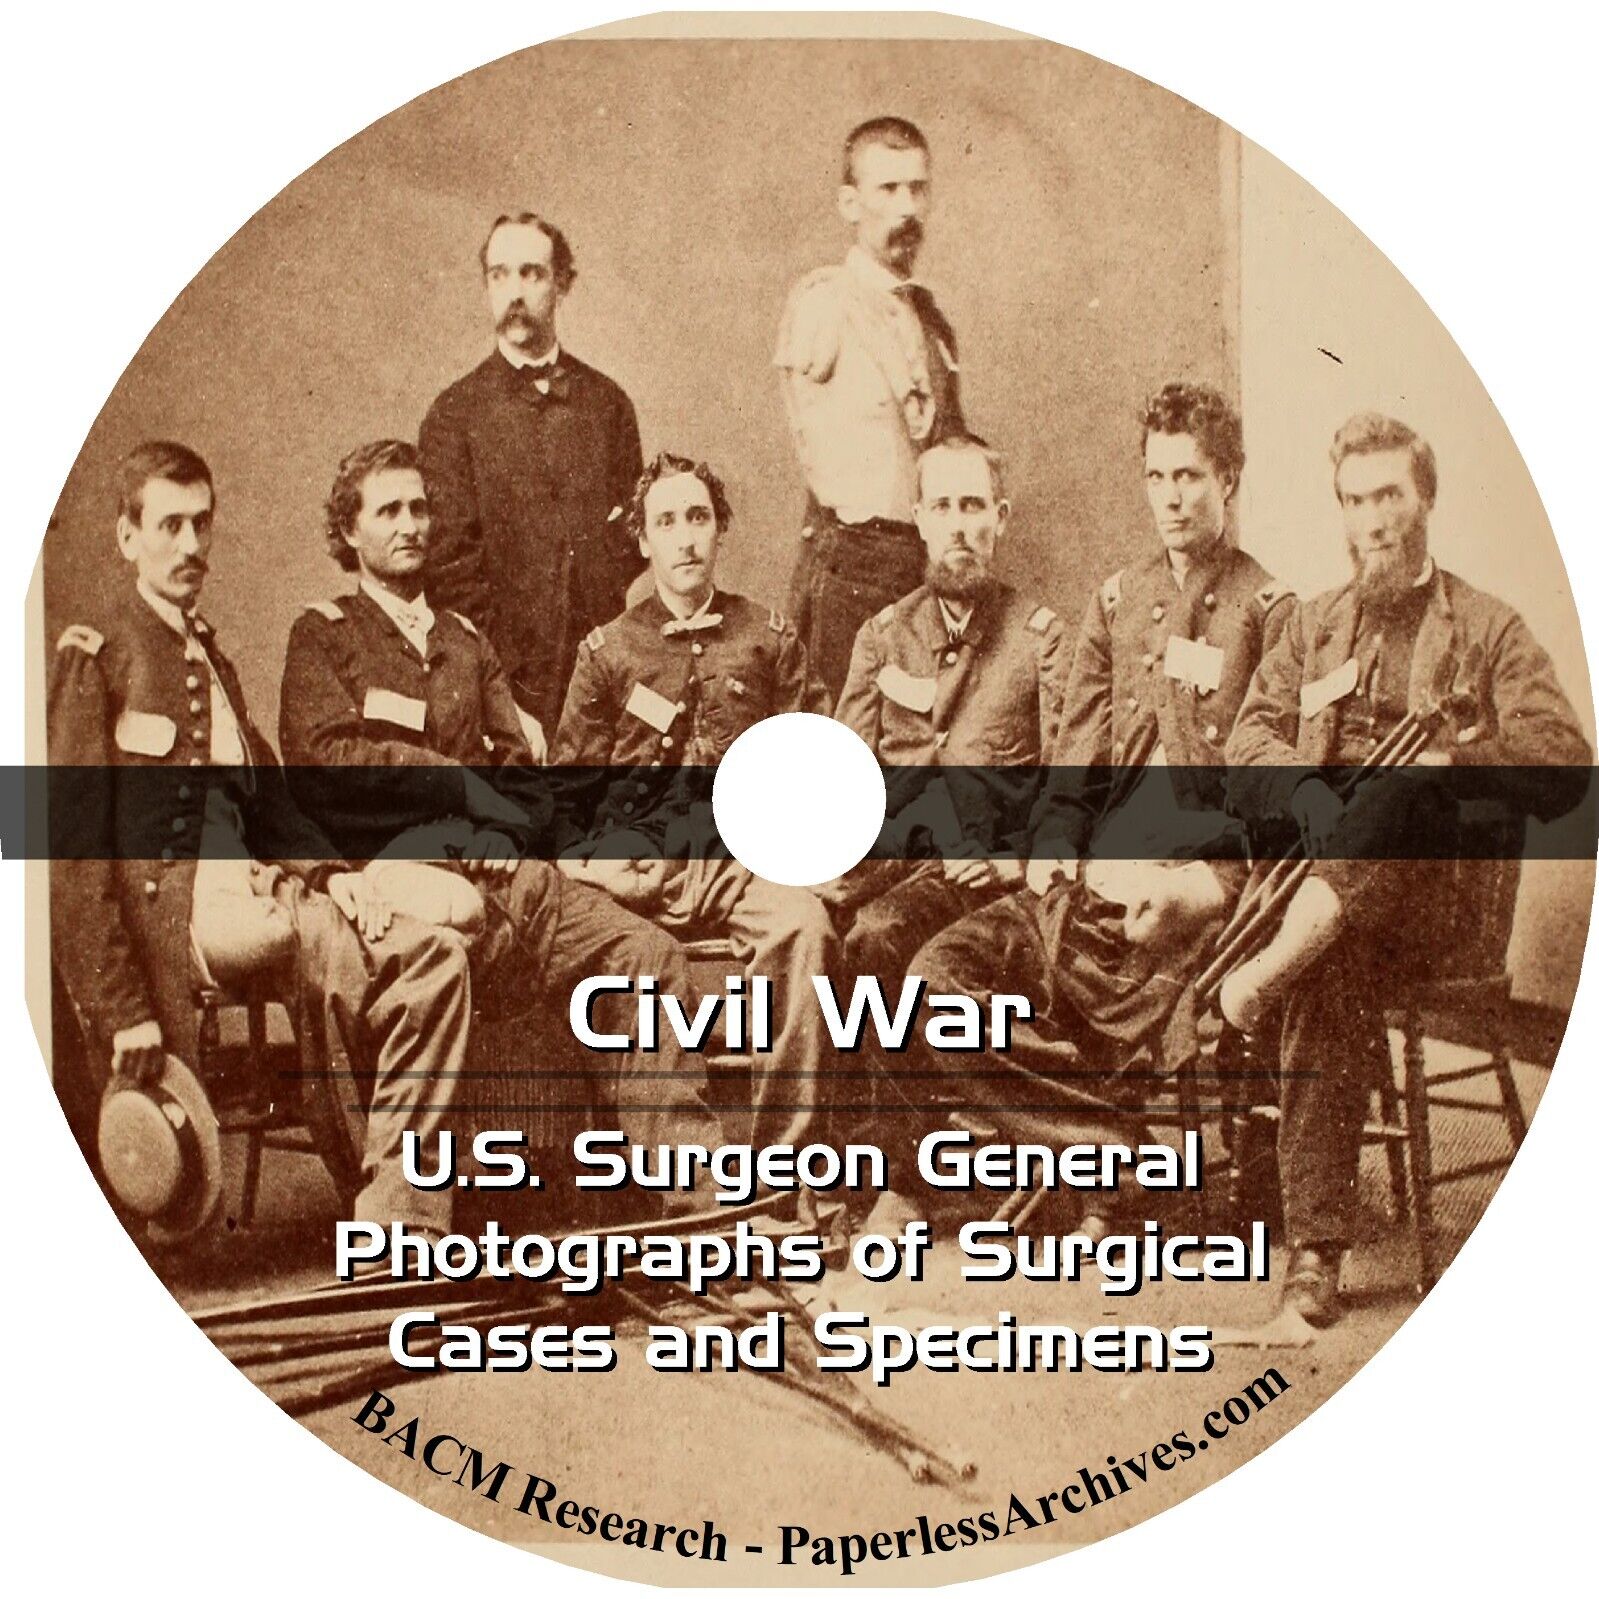 Civil War: U.S. Surgeon General Photos & Histories of Surgical Cases & Specimens